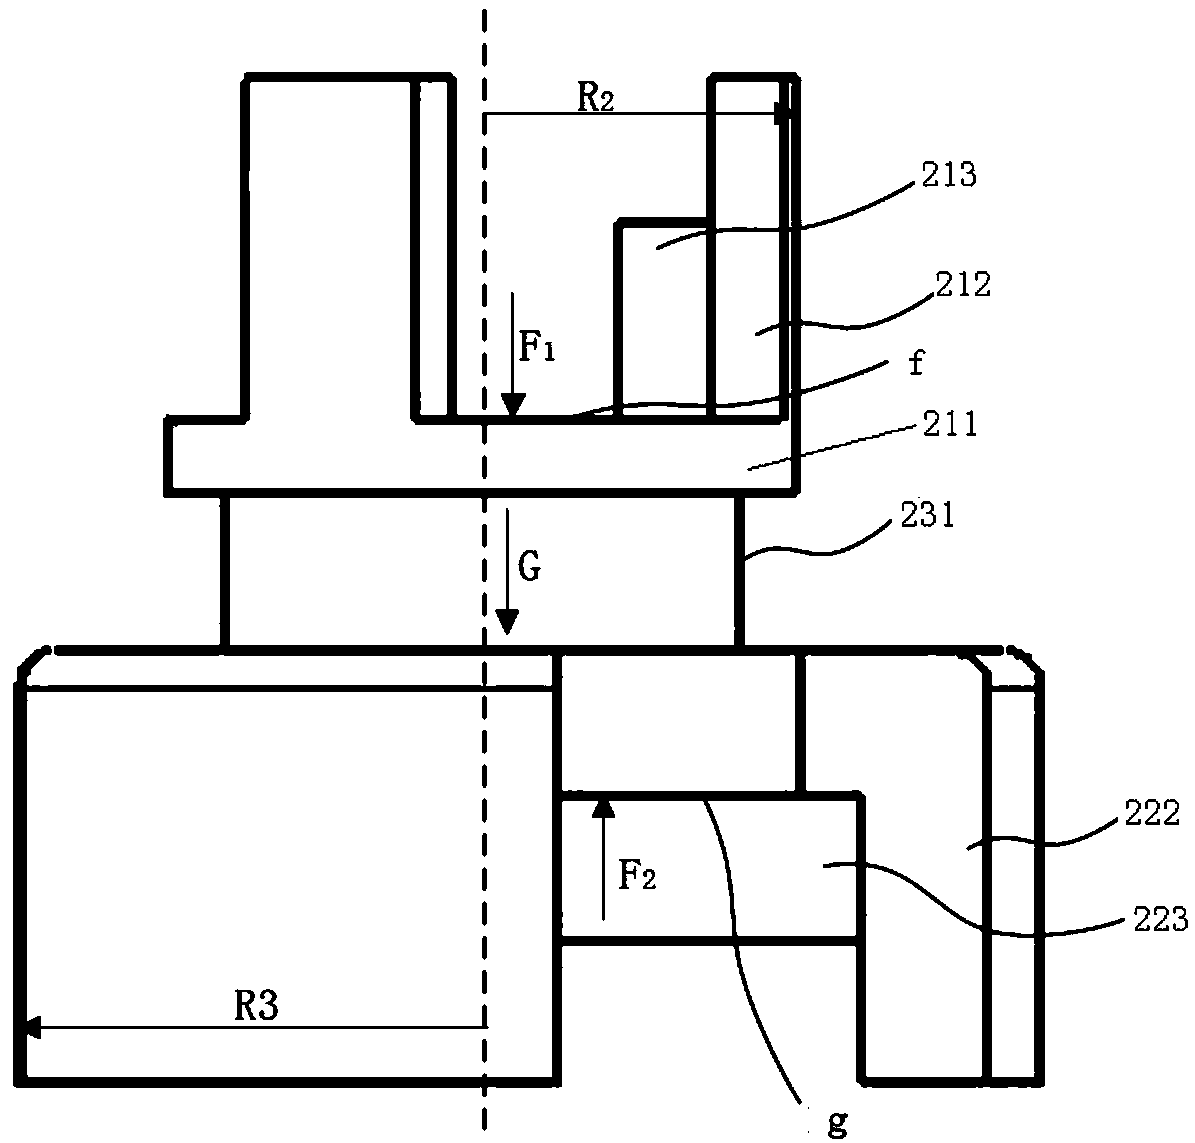 Internal one-way valve